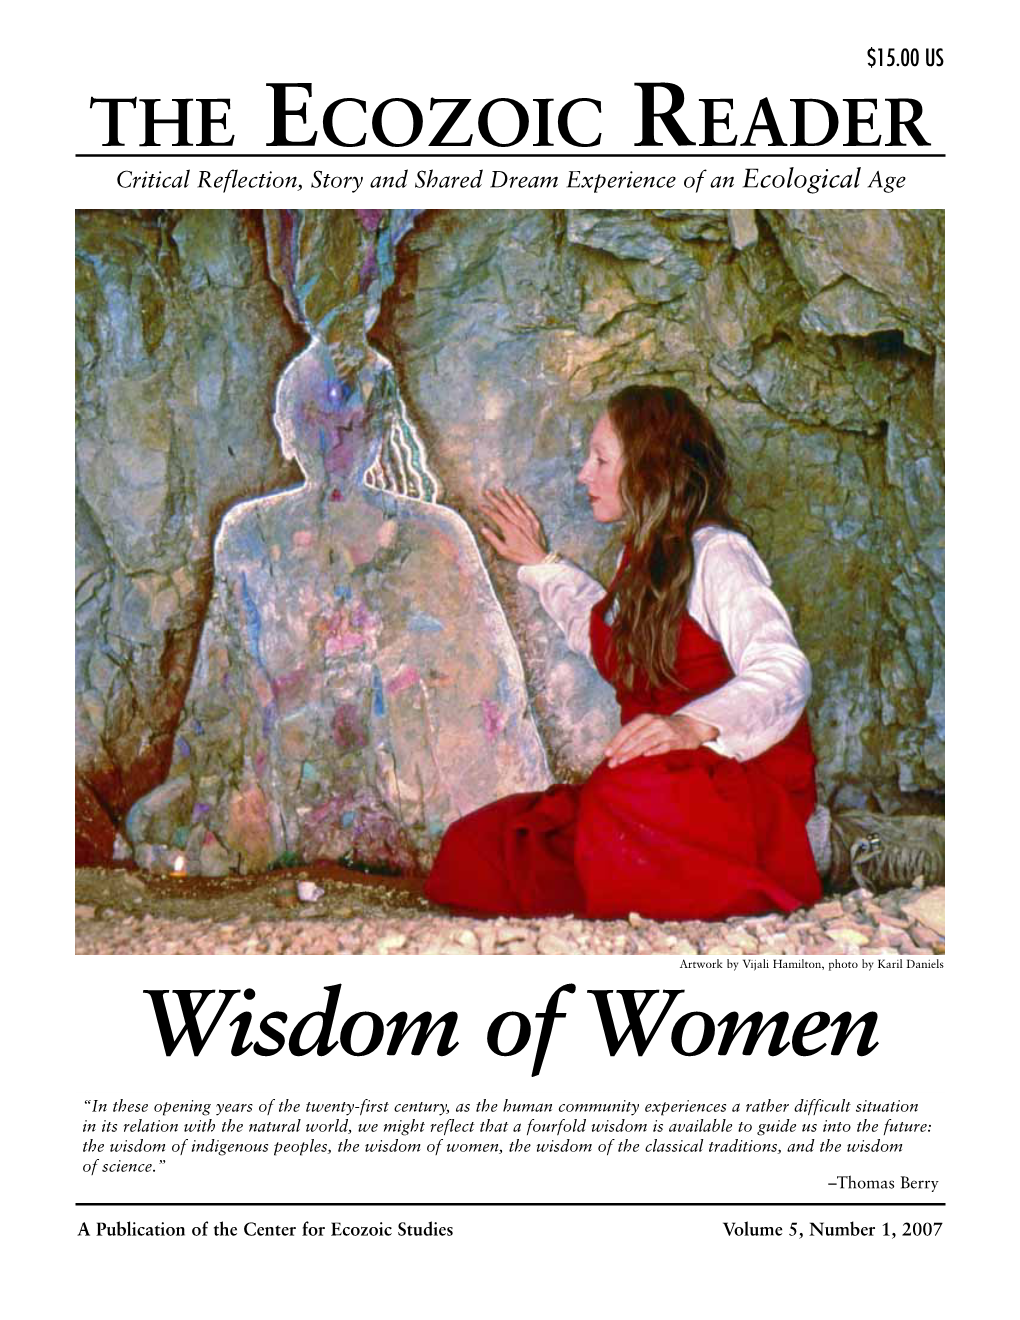 Ecozoic Reader.Vol. 5, No. 1. Wisdom of Women 2007.Text